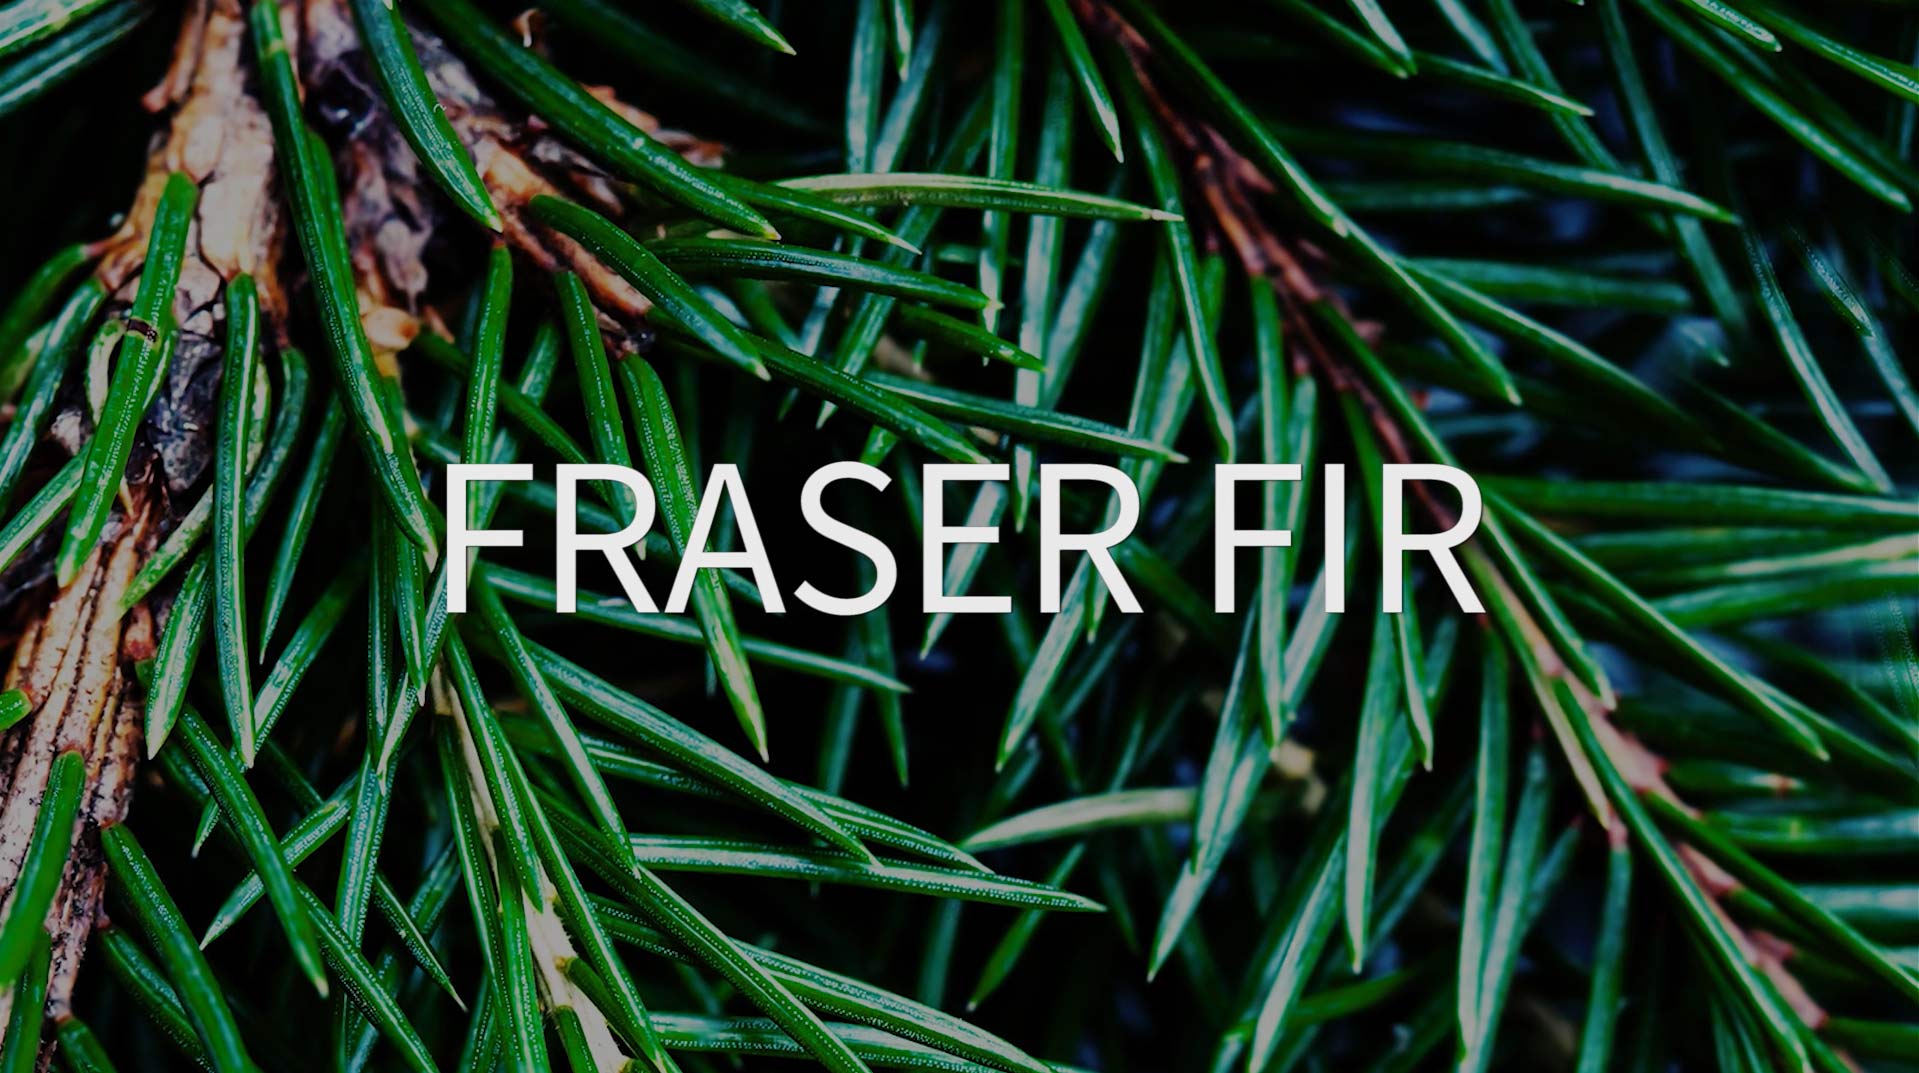 Frasier Fir Fragrance Oil 311 - Wholesale Supplies Plus